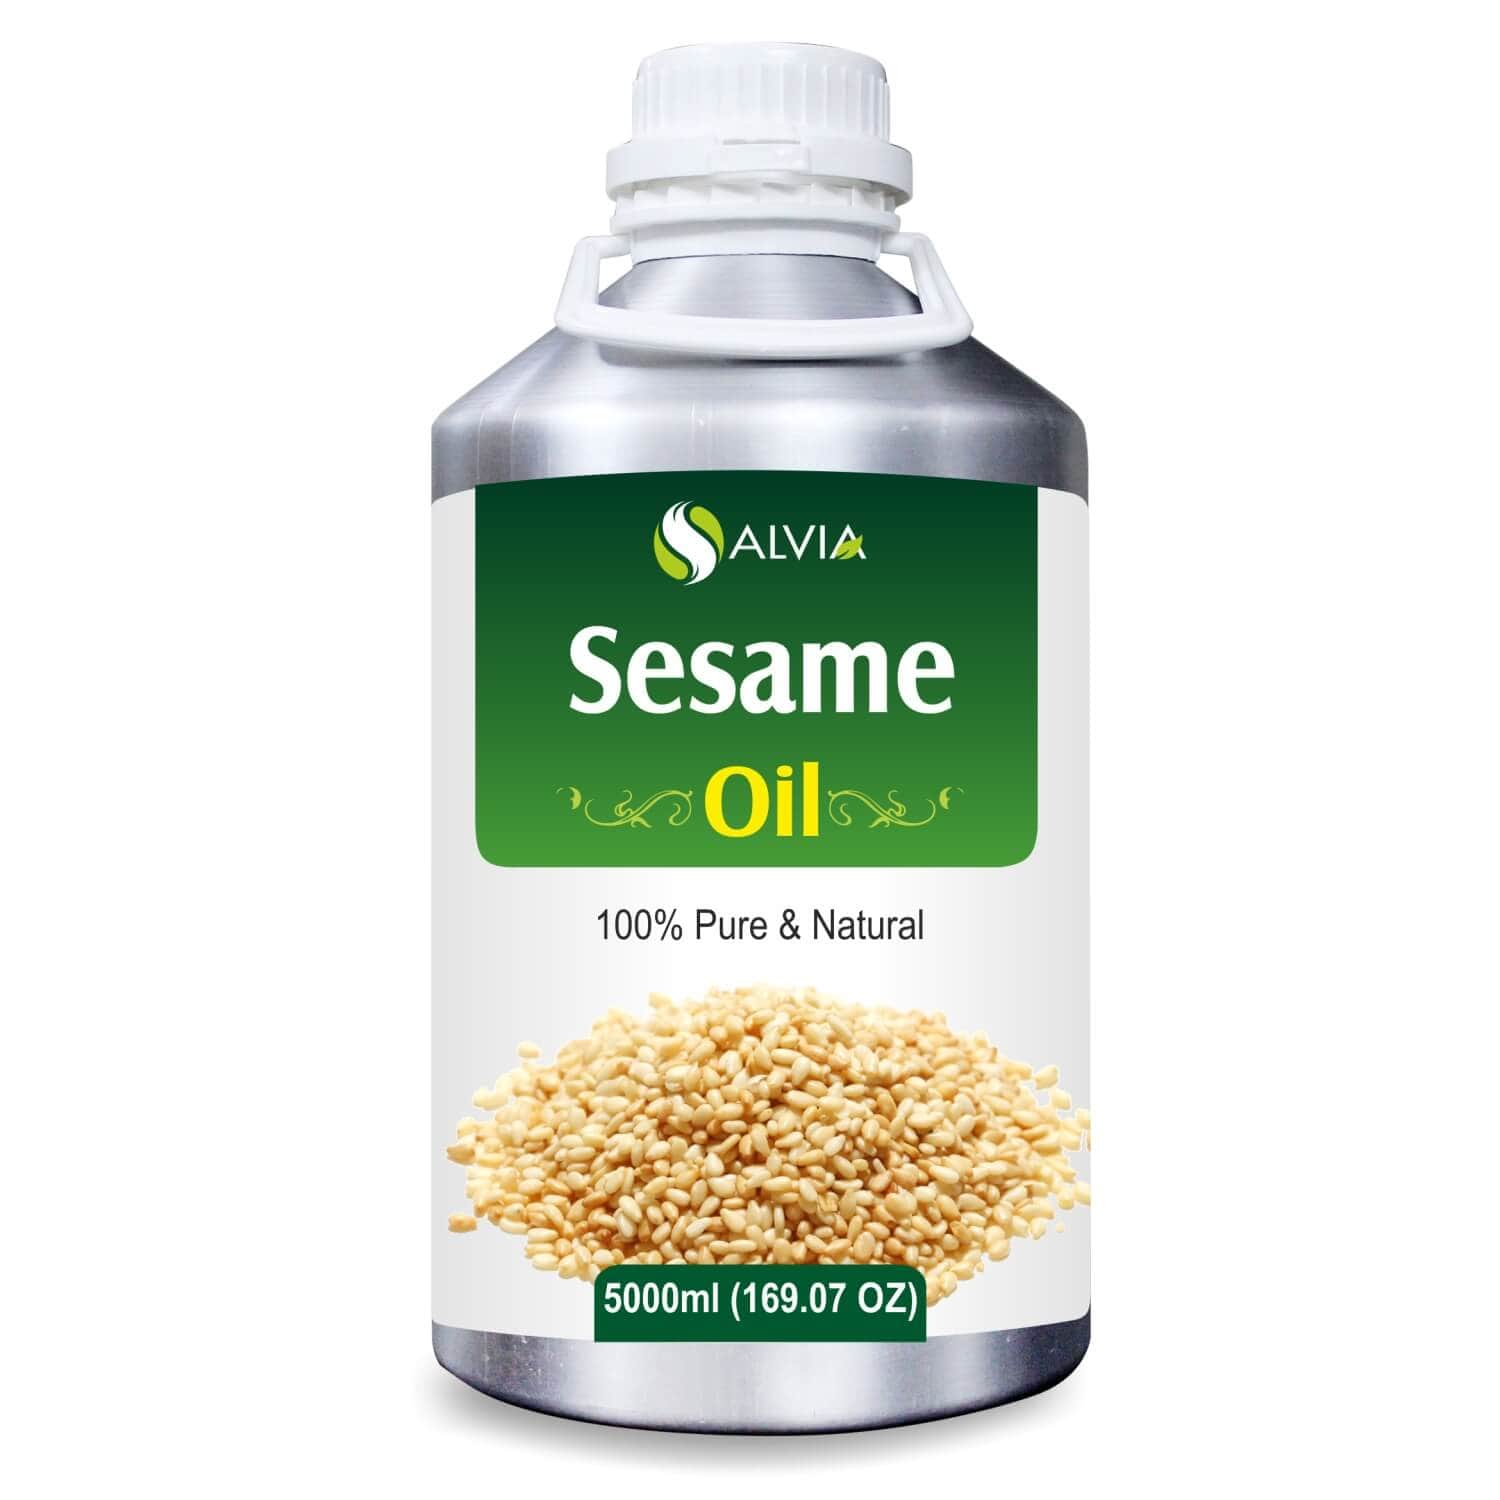 Salvia Natural Carrier Oils 5000ml Sesame Oil (Sesamum indicum) 100% Pure & Natural Oil